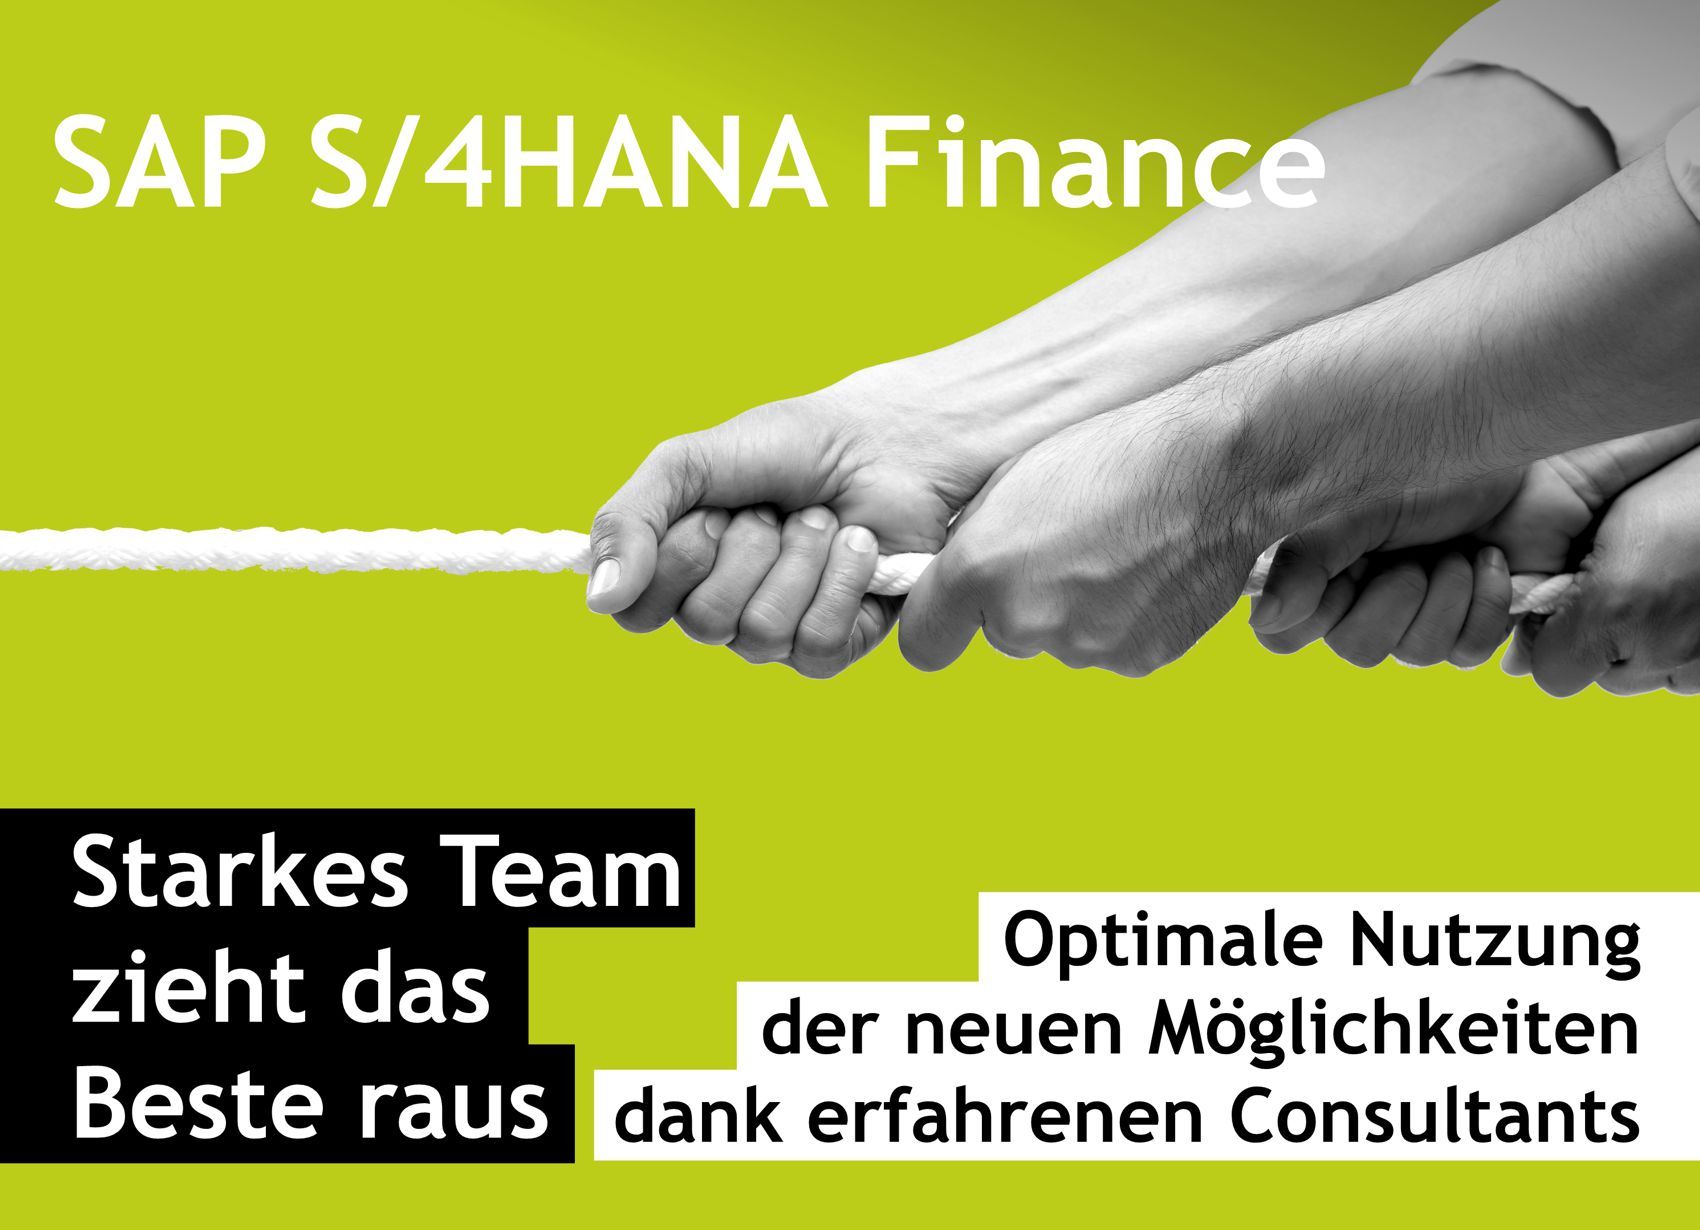 Starkes SAP S/4HANA FINANCE Team